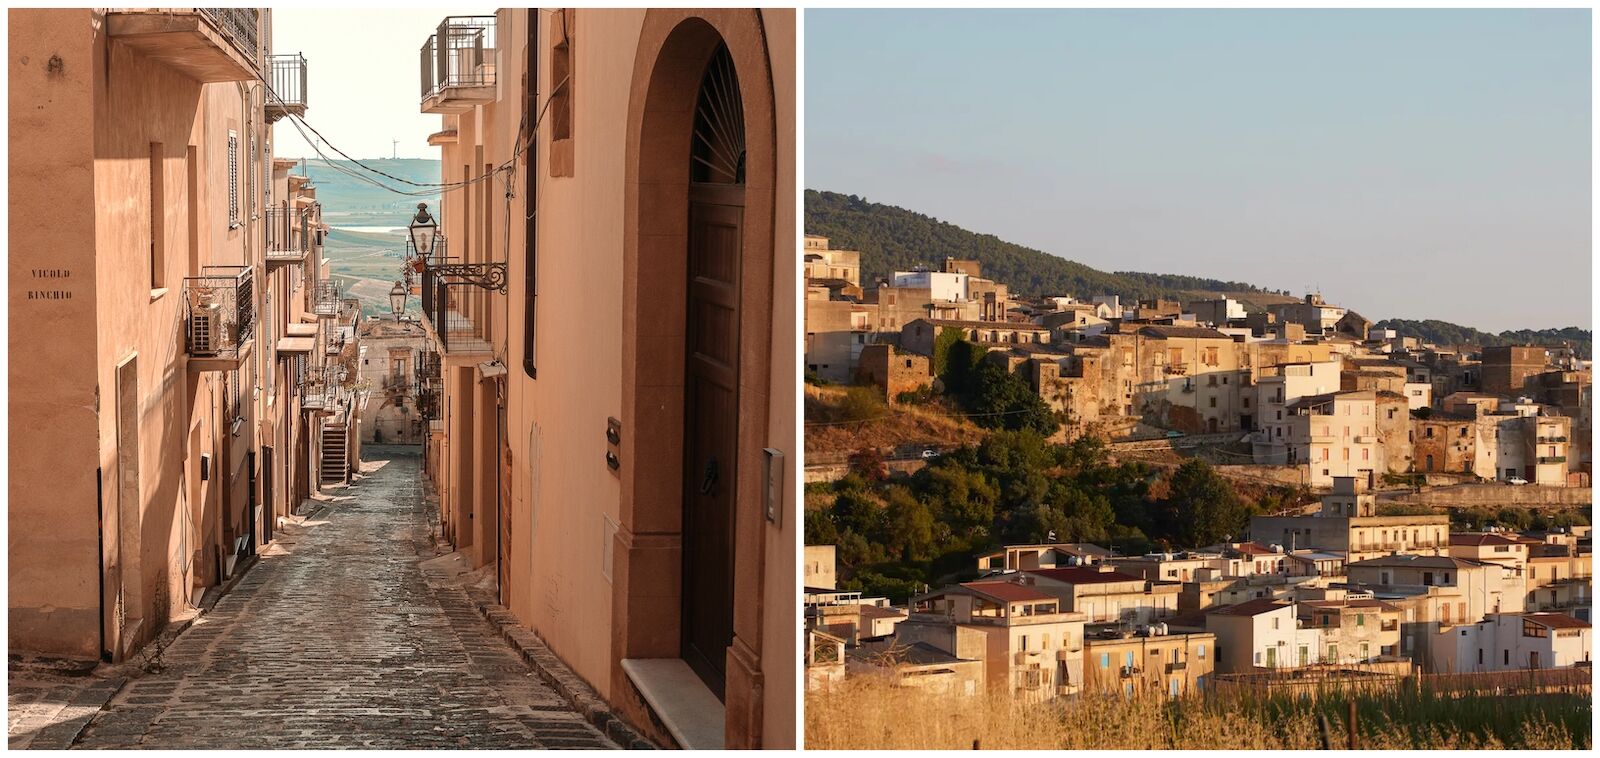 Views of the village of Sambuca, Sicily